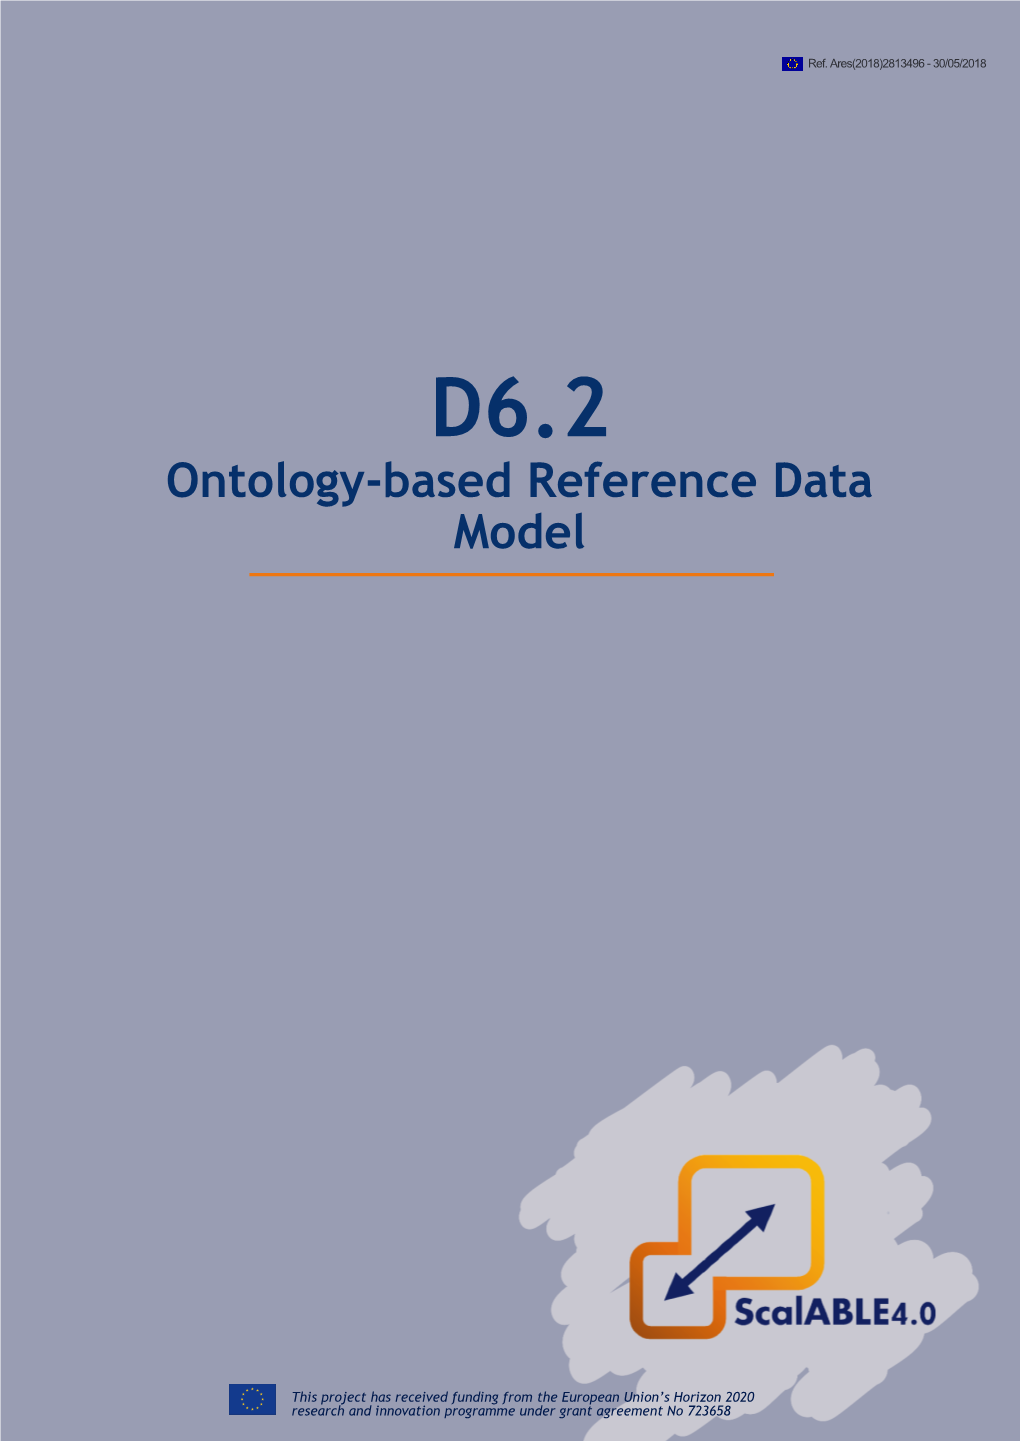 Ontology-Based Reference Data Model